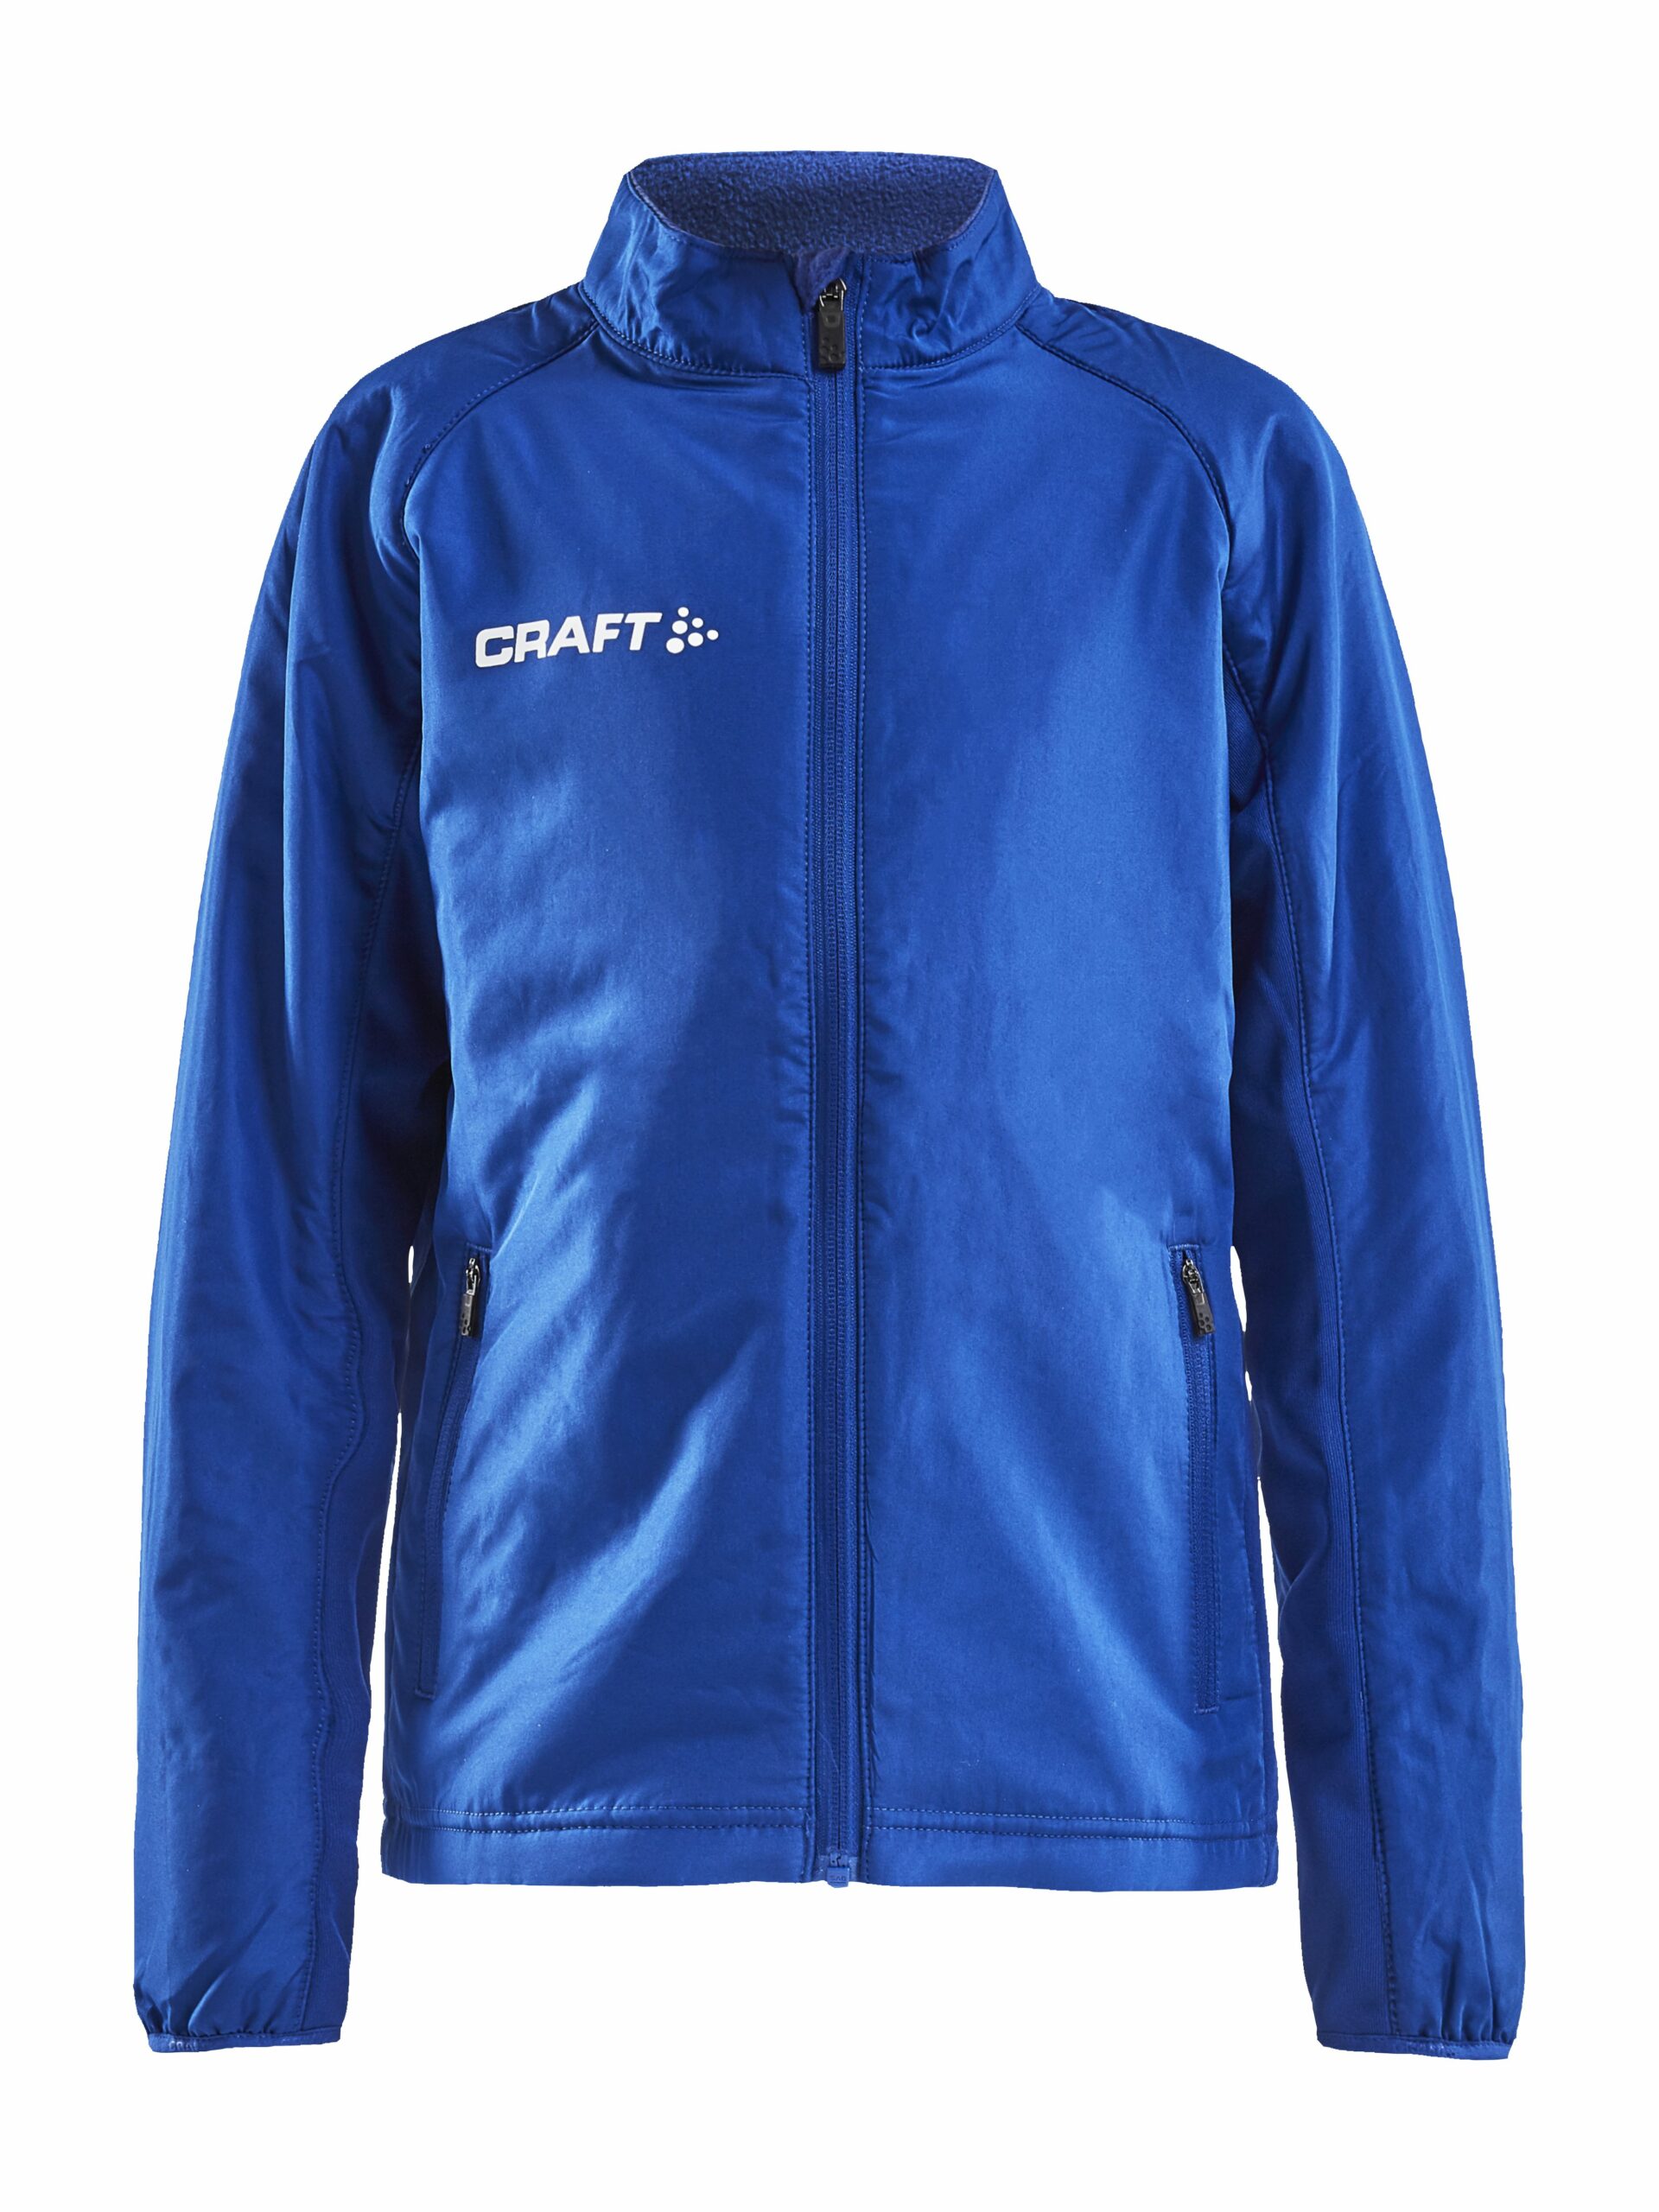 Craft - Jacket Warm JR - Club Cobolt 158/164